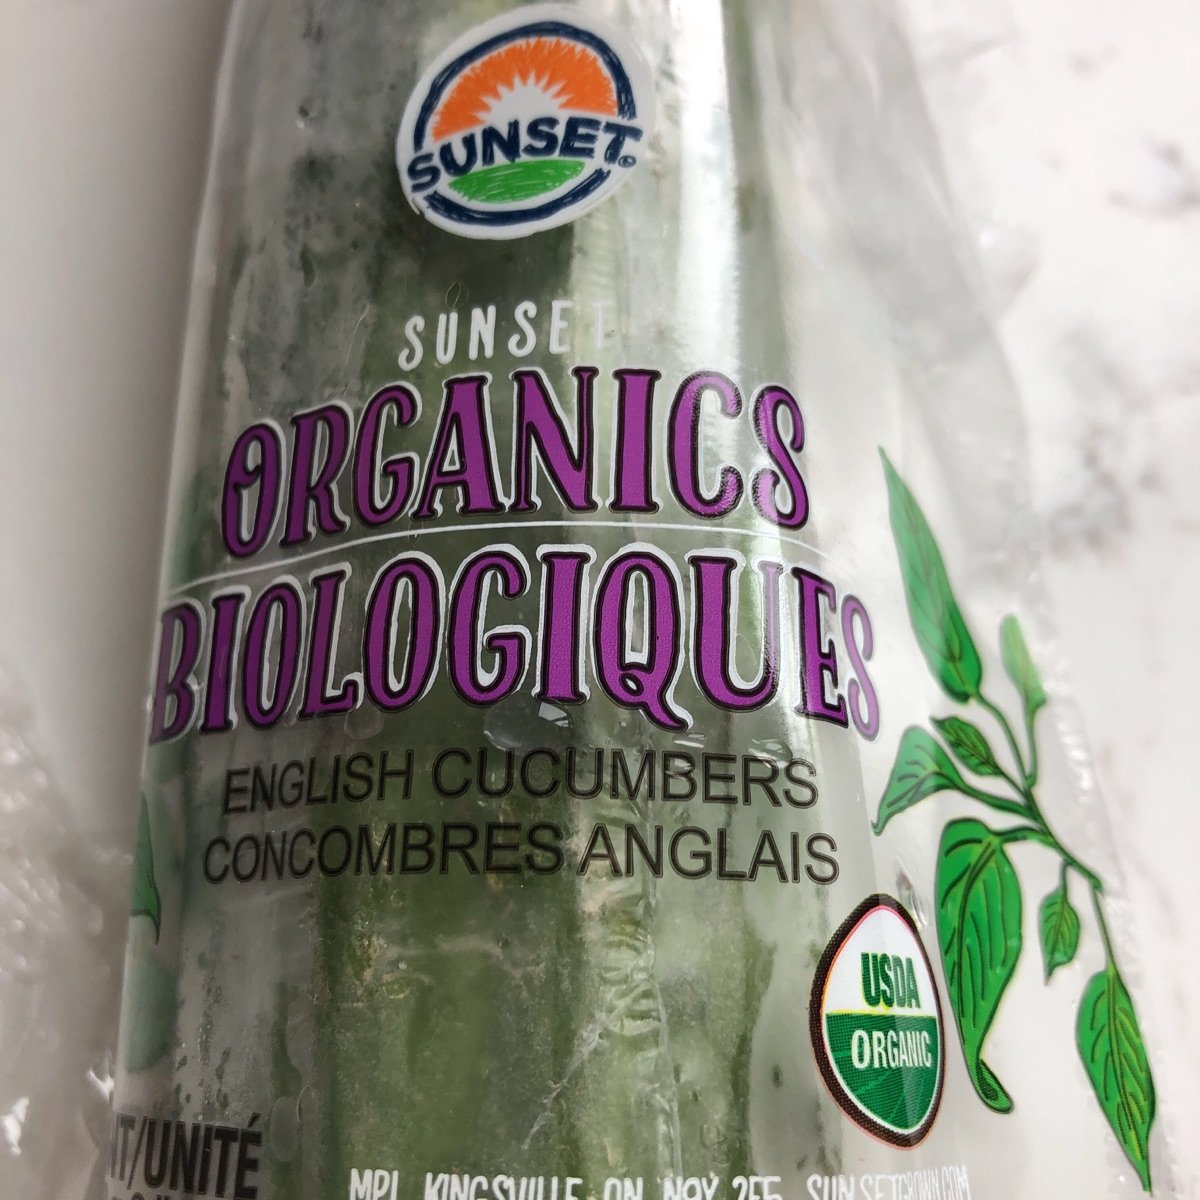 Sunset Organic English cucumber Reviews